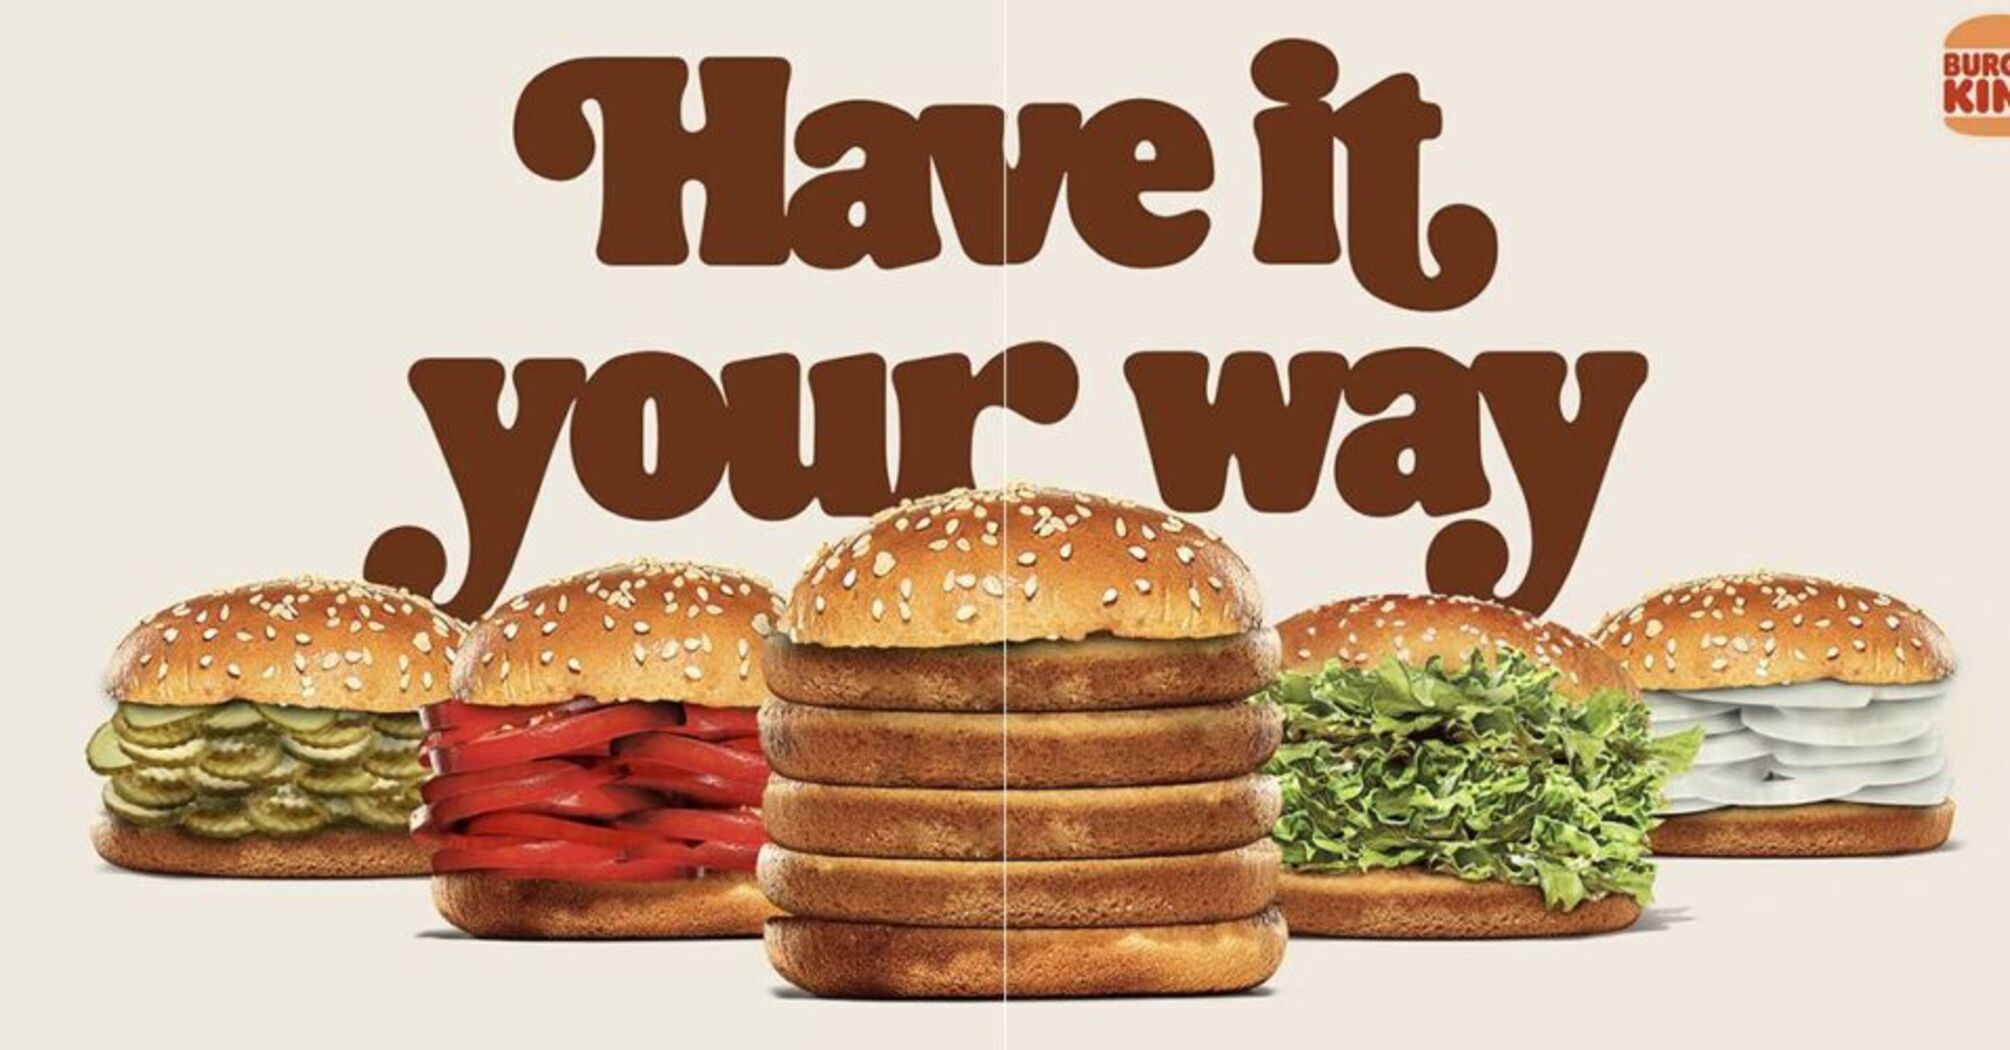 Burger King's viral cheeseburger criticized on social media